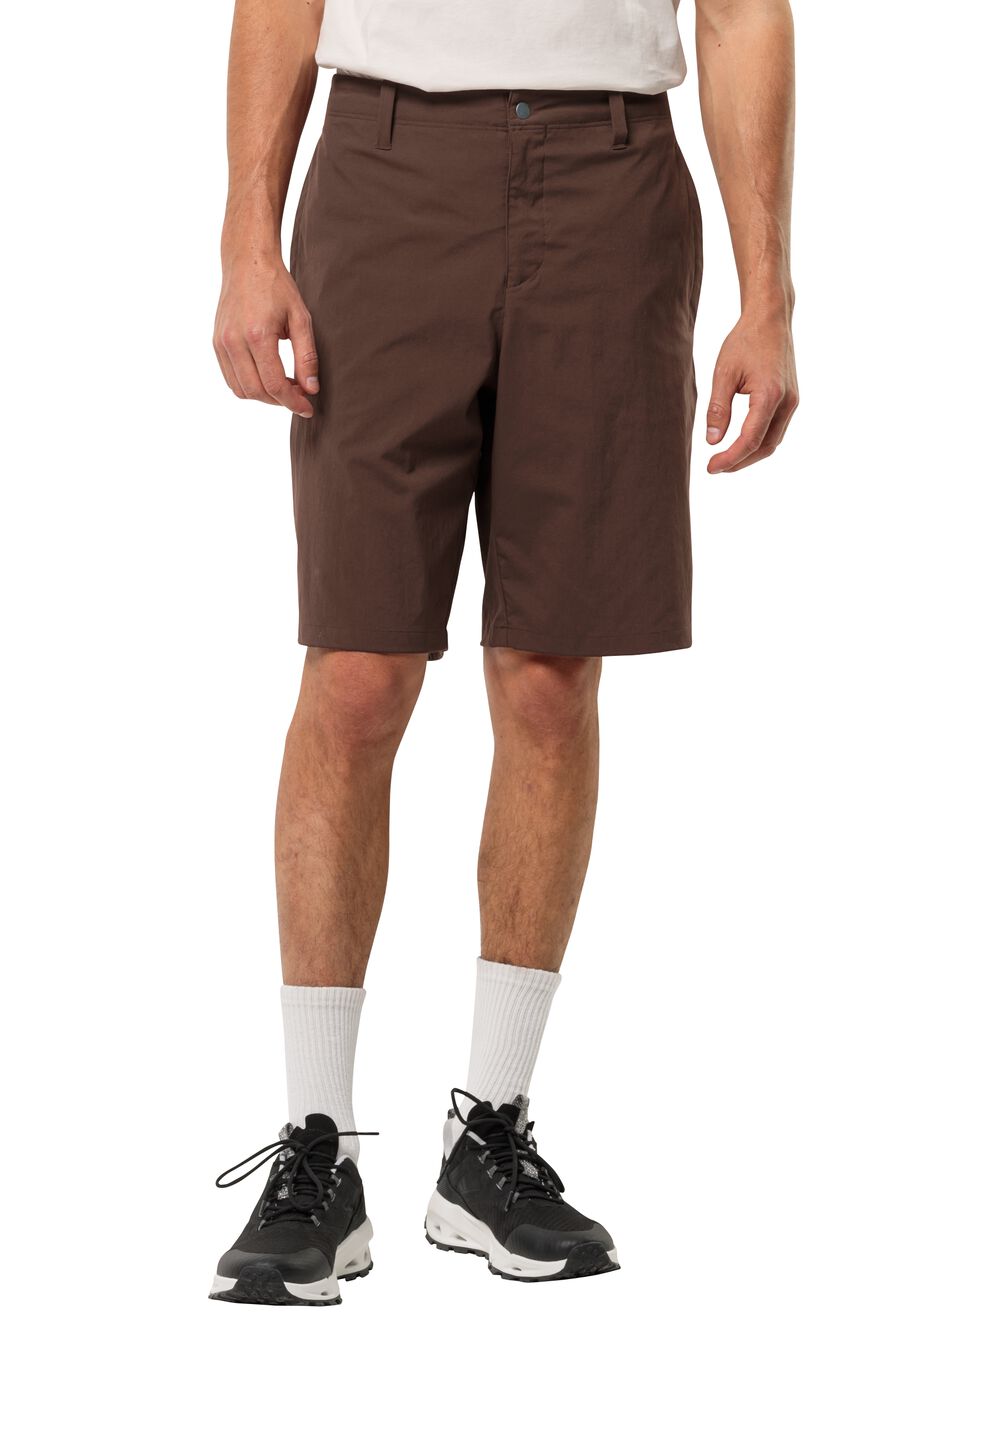 Jack Wolfskin Desert Shorts Men Korte broek Heren 58 bruin dark mahogany